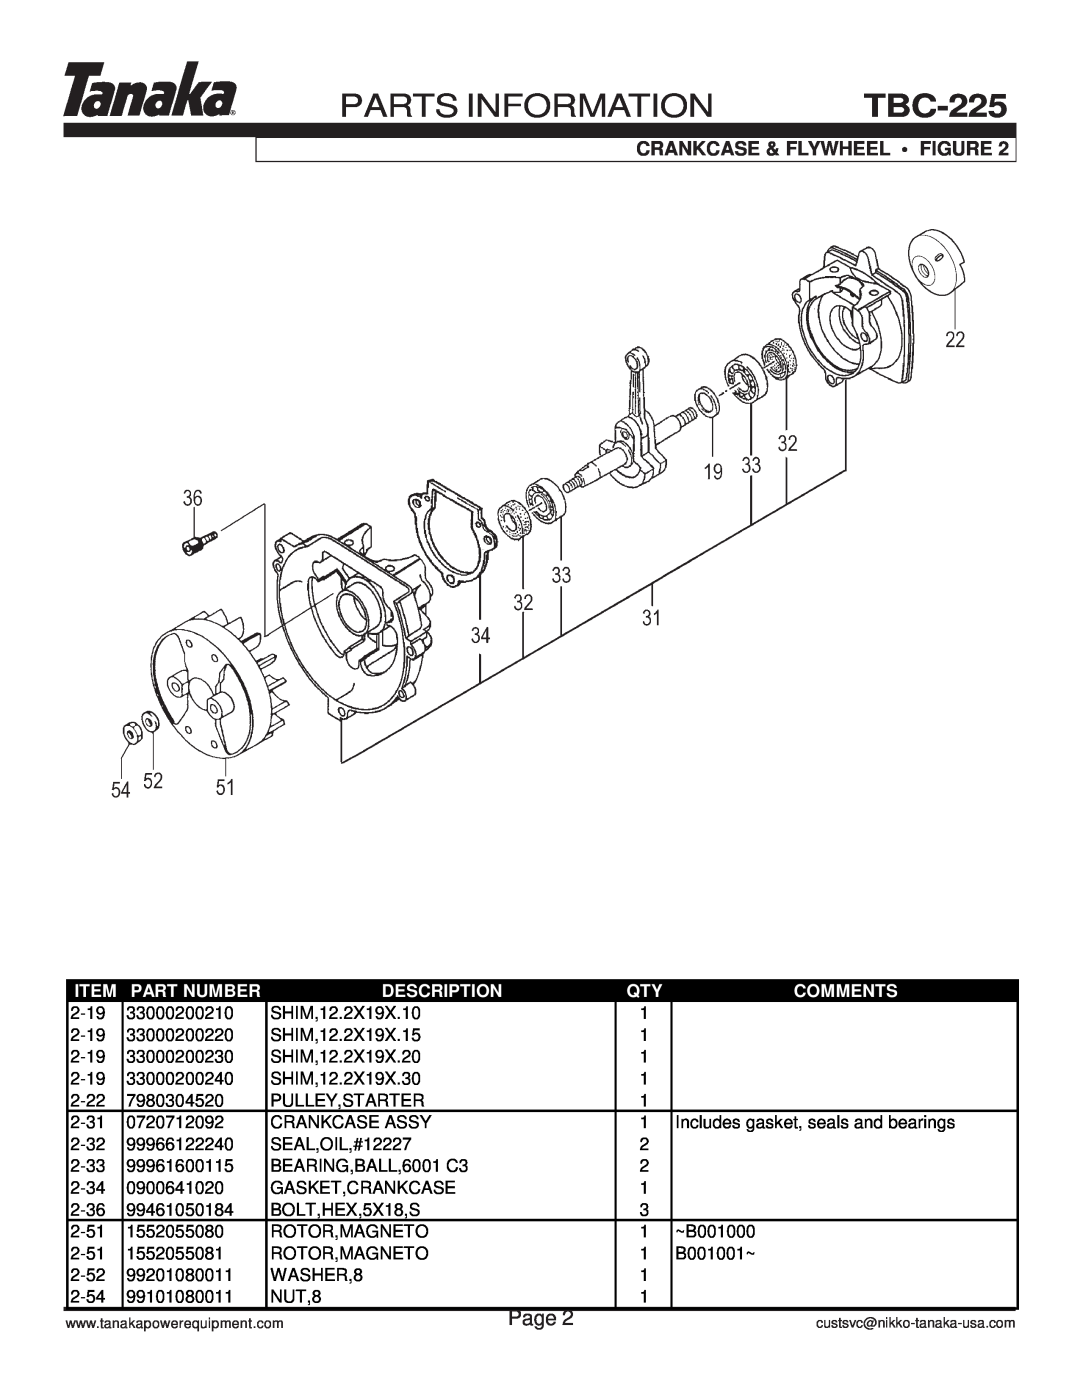 Tanaka TBC-225 manual Parts Information, Page, Crankcase & Flywheel Figure, Part Number, Description, Comments 